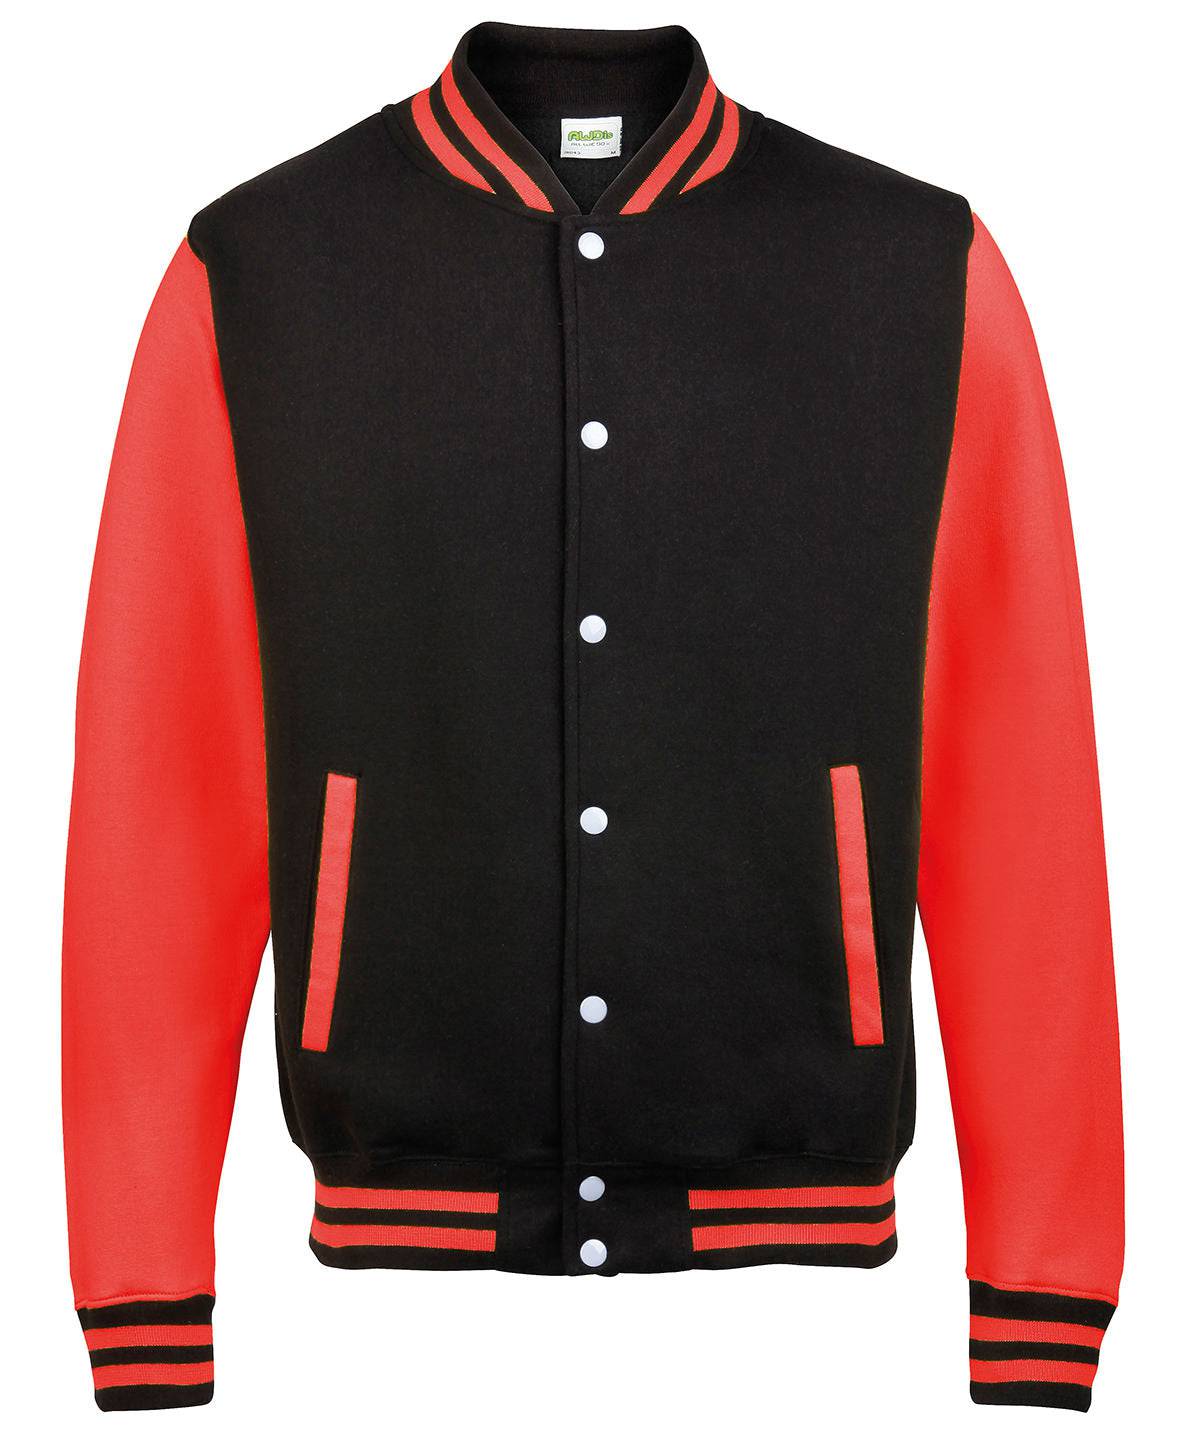 Jet Black/Fire Red* - Varsity jacket